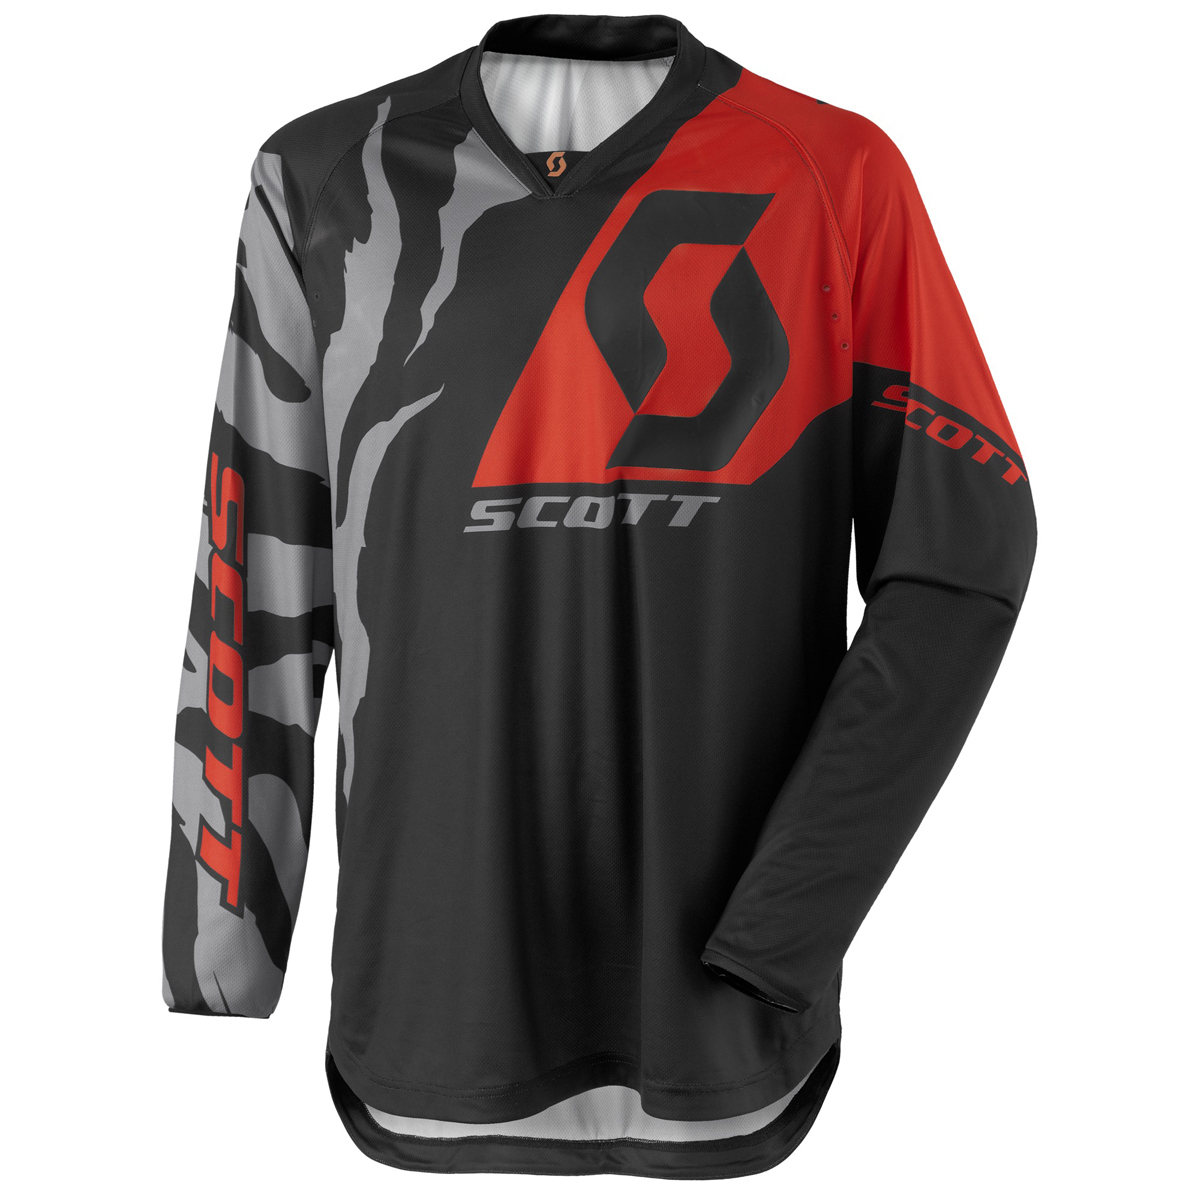 DH Fahrrad Trikot schwarz/rot 2019 SCOTT 350 Dirt MX Motocross Jersey 